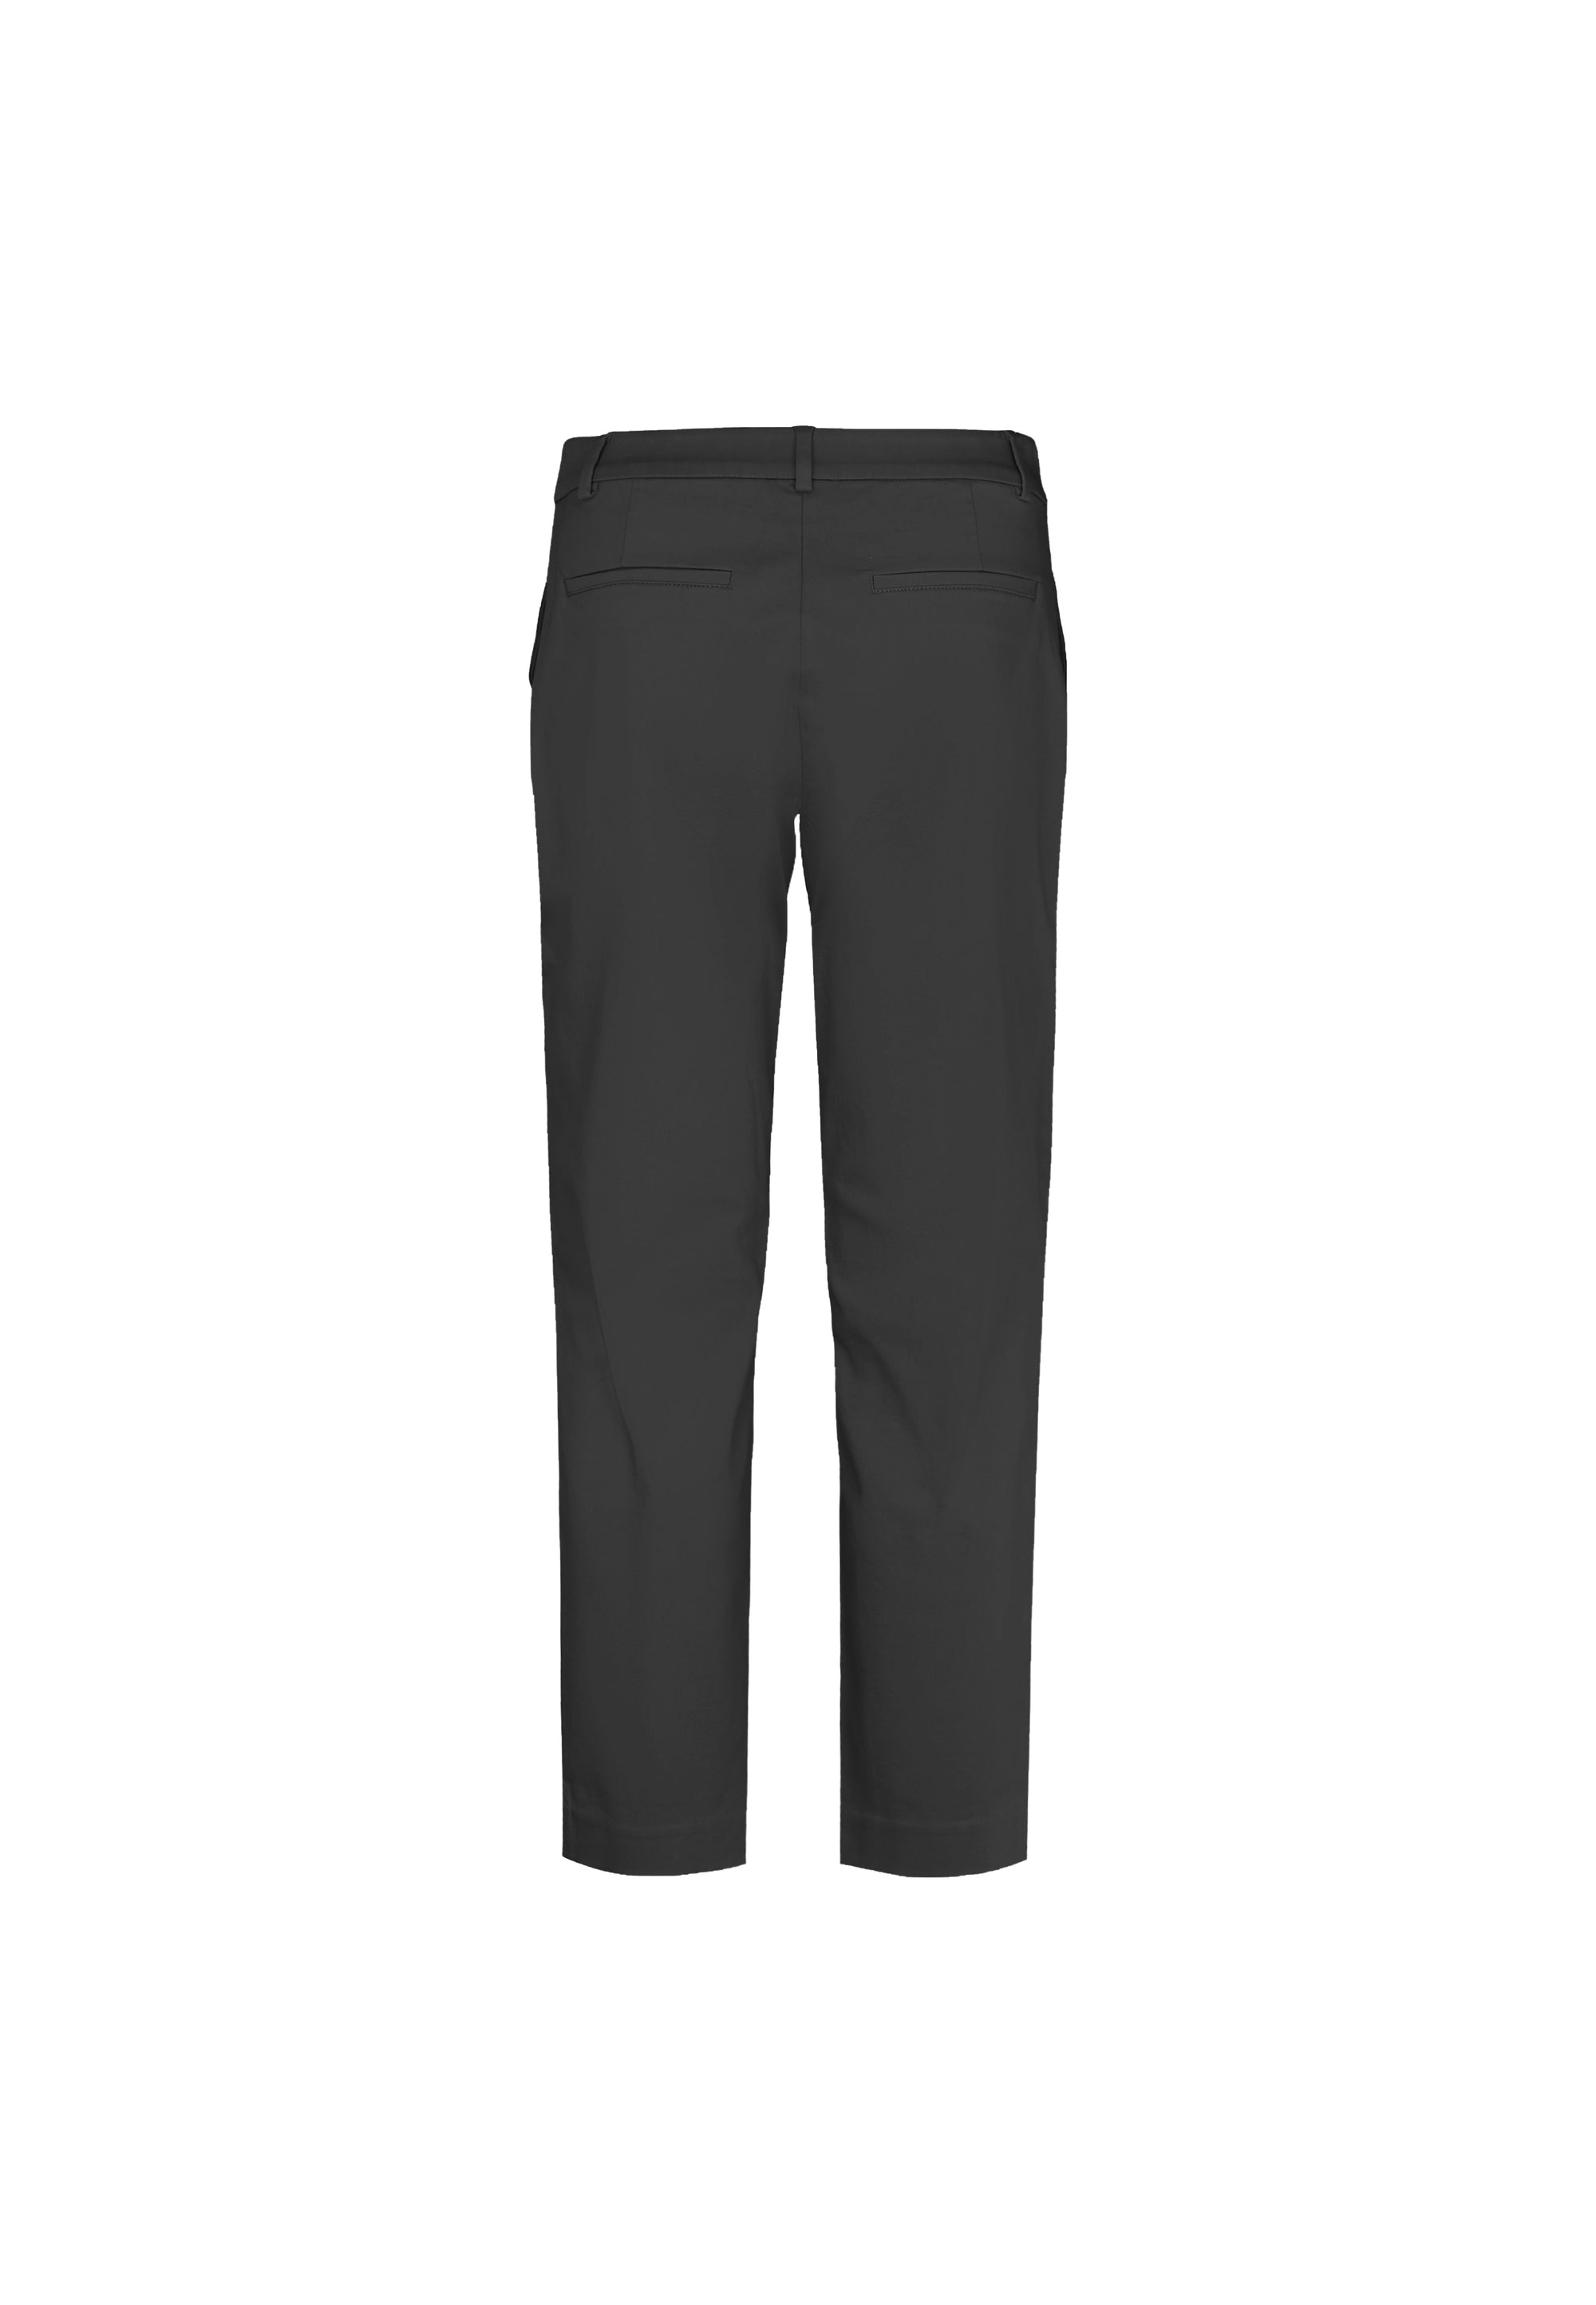 LAURIE  Galina Regular - Short Length Trousers REGULAR 99105 Black